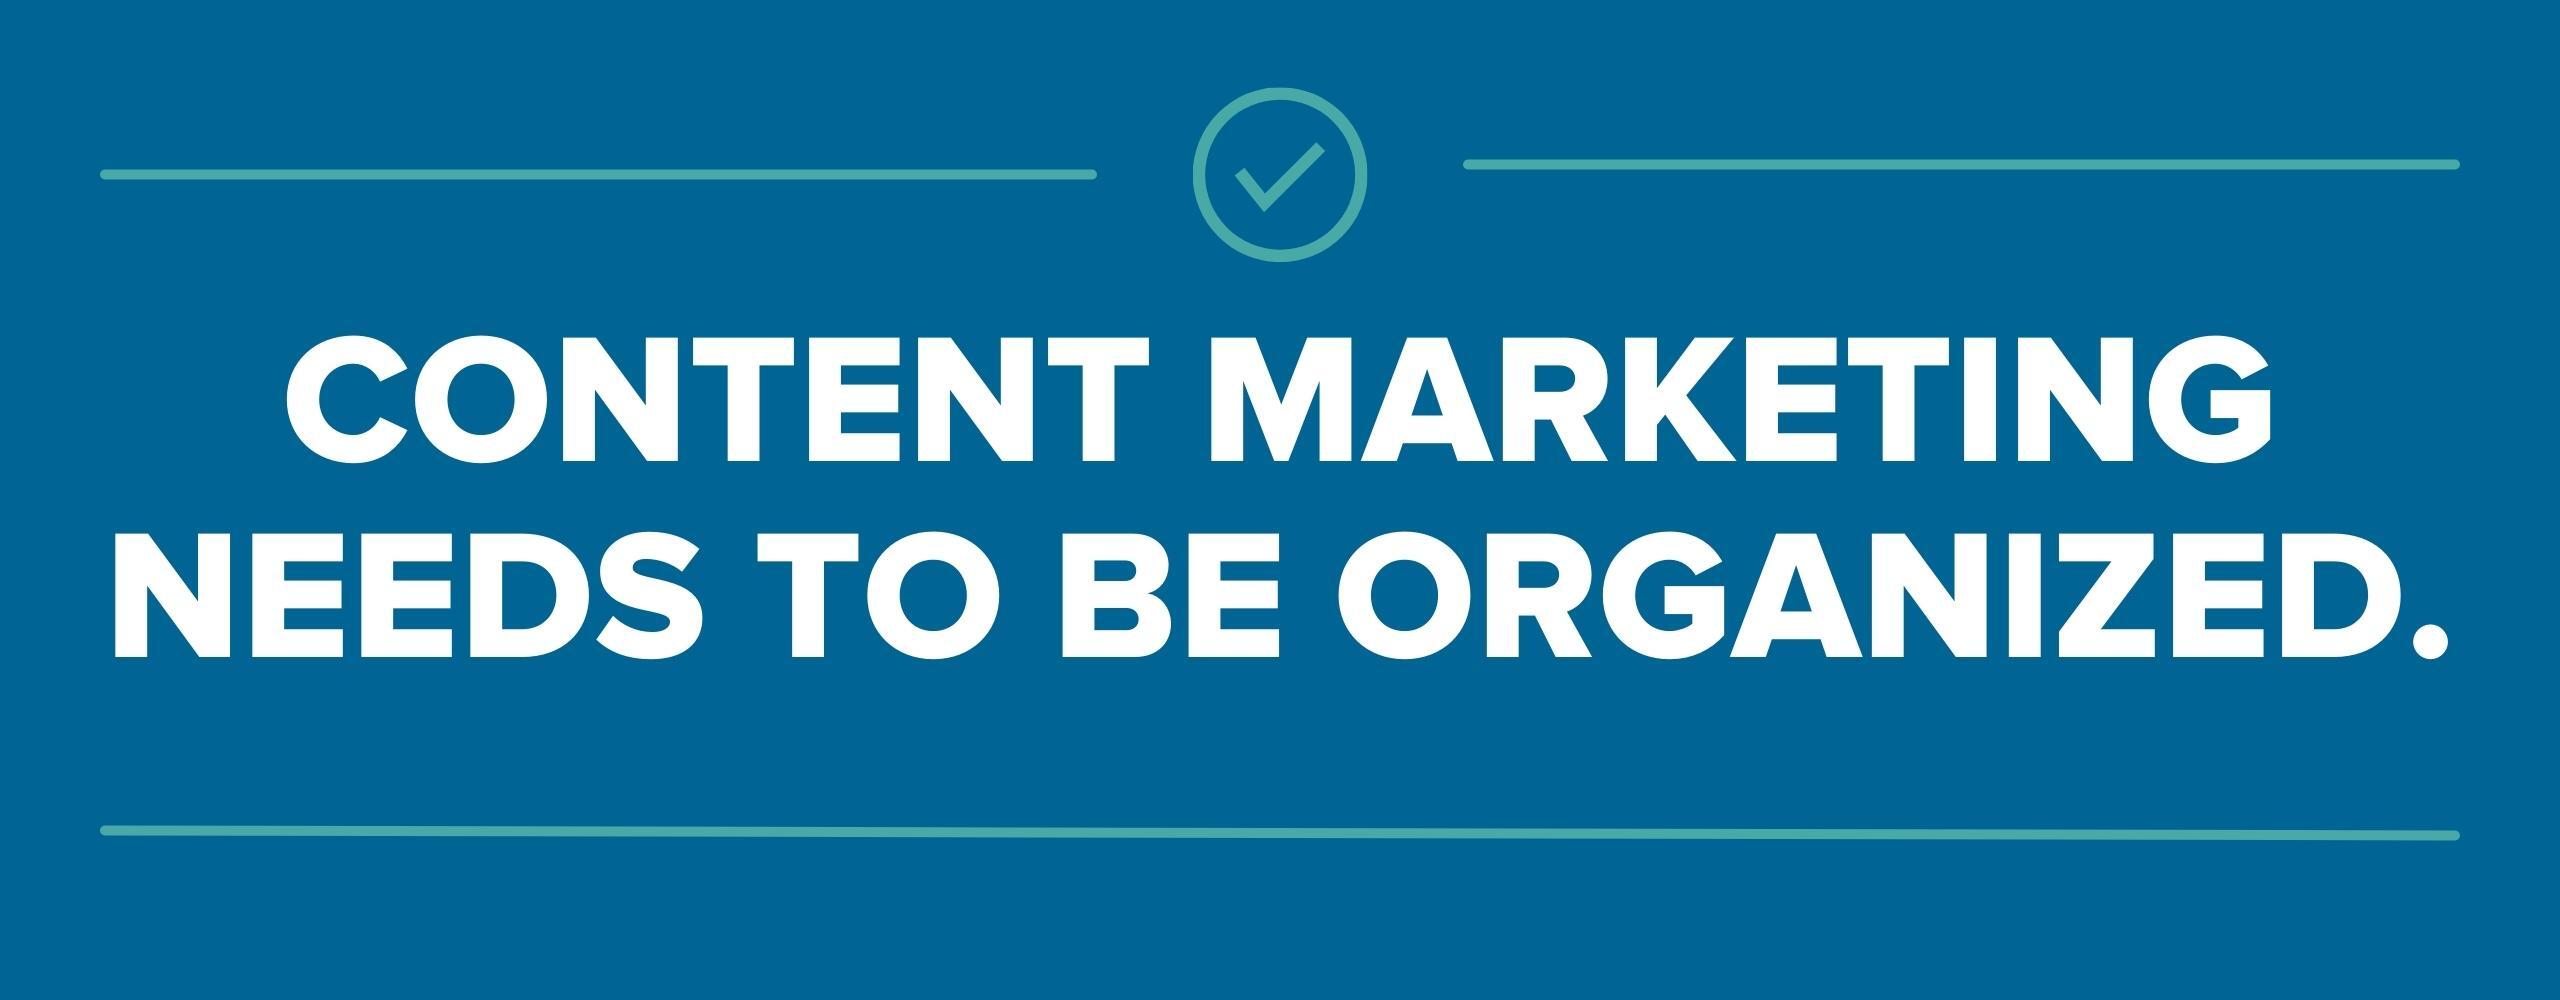 content-marketing-organized